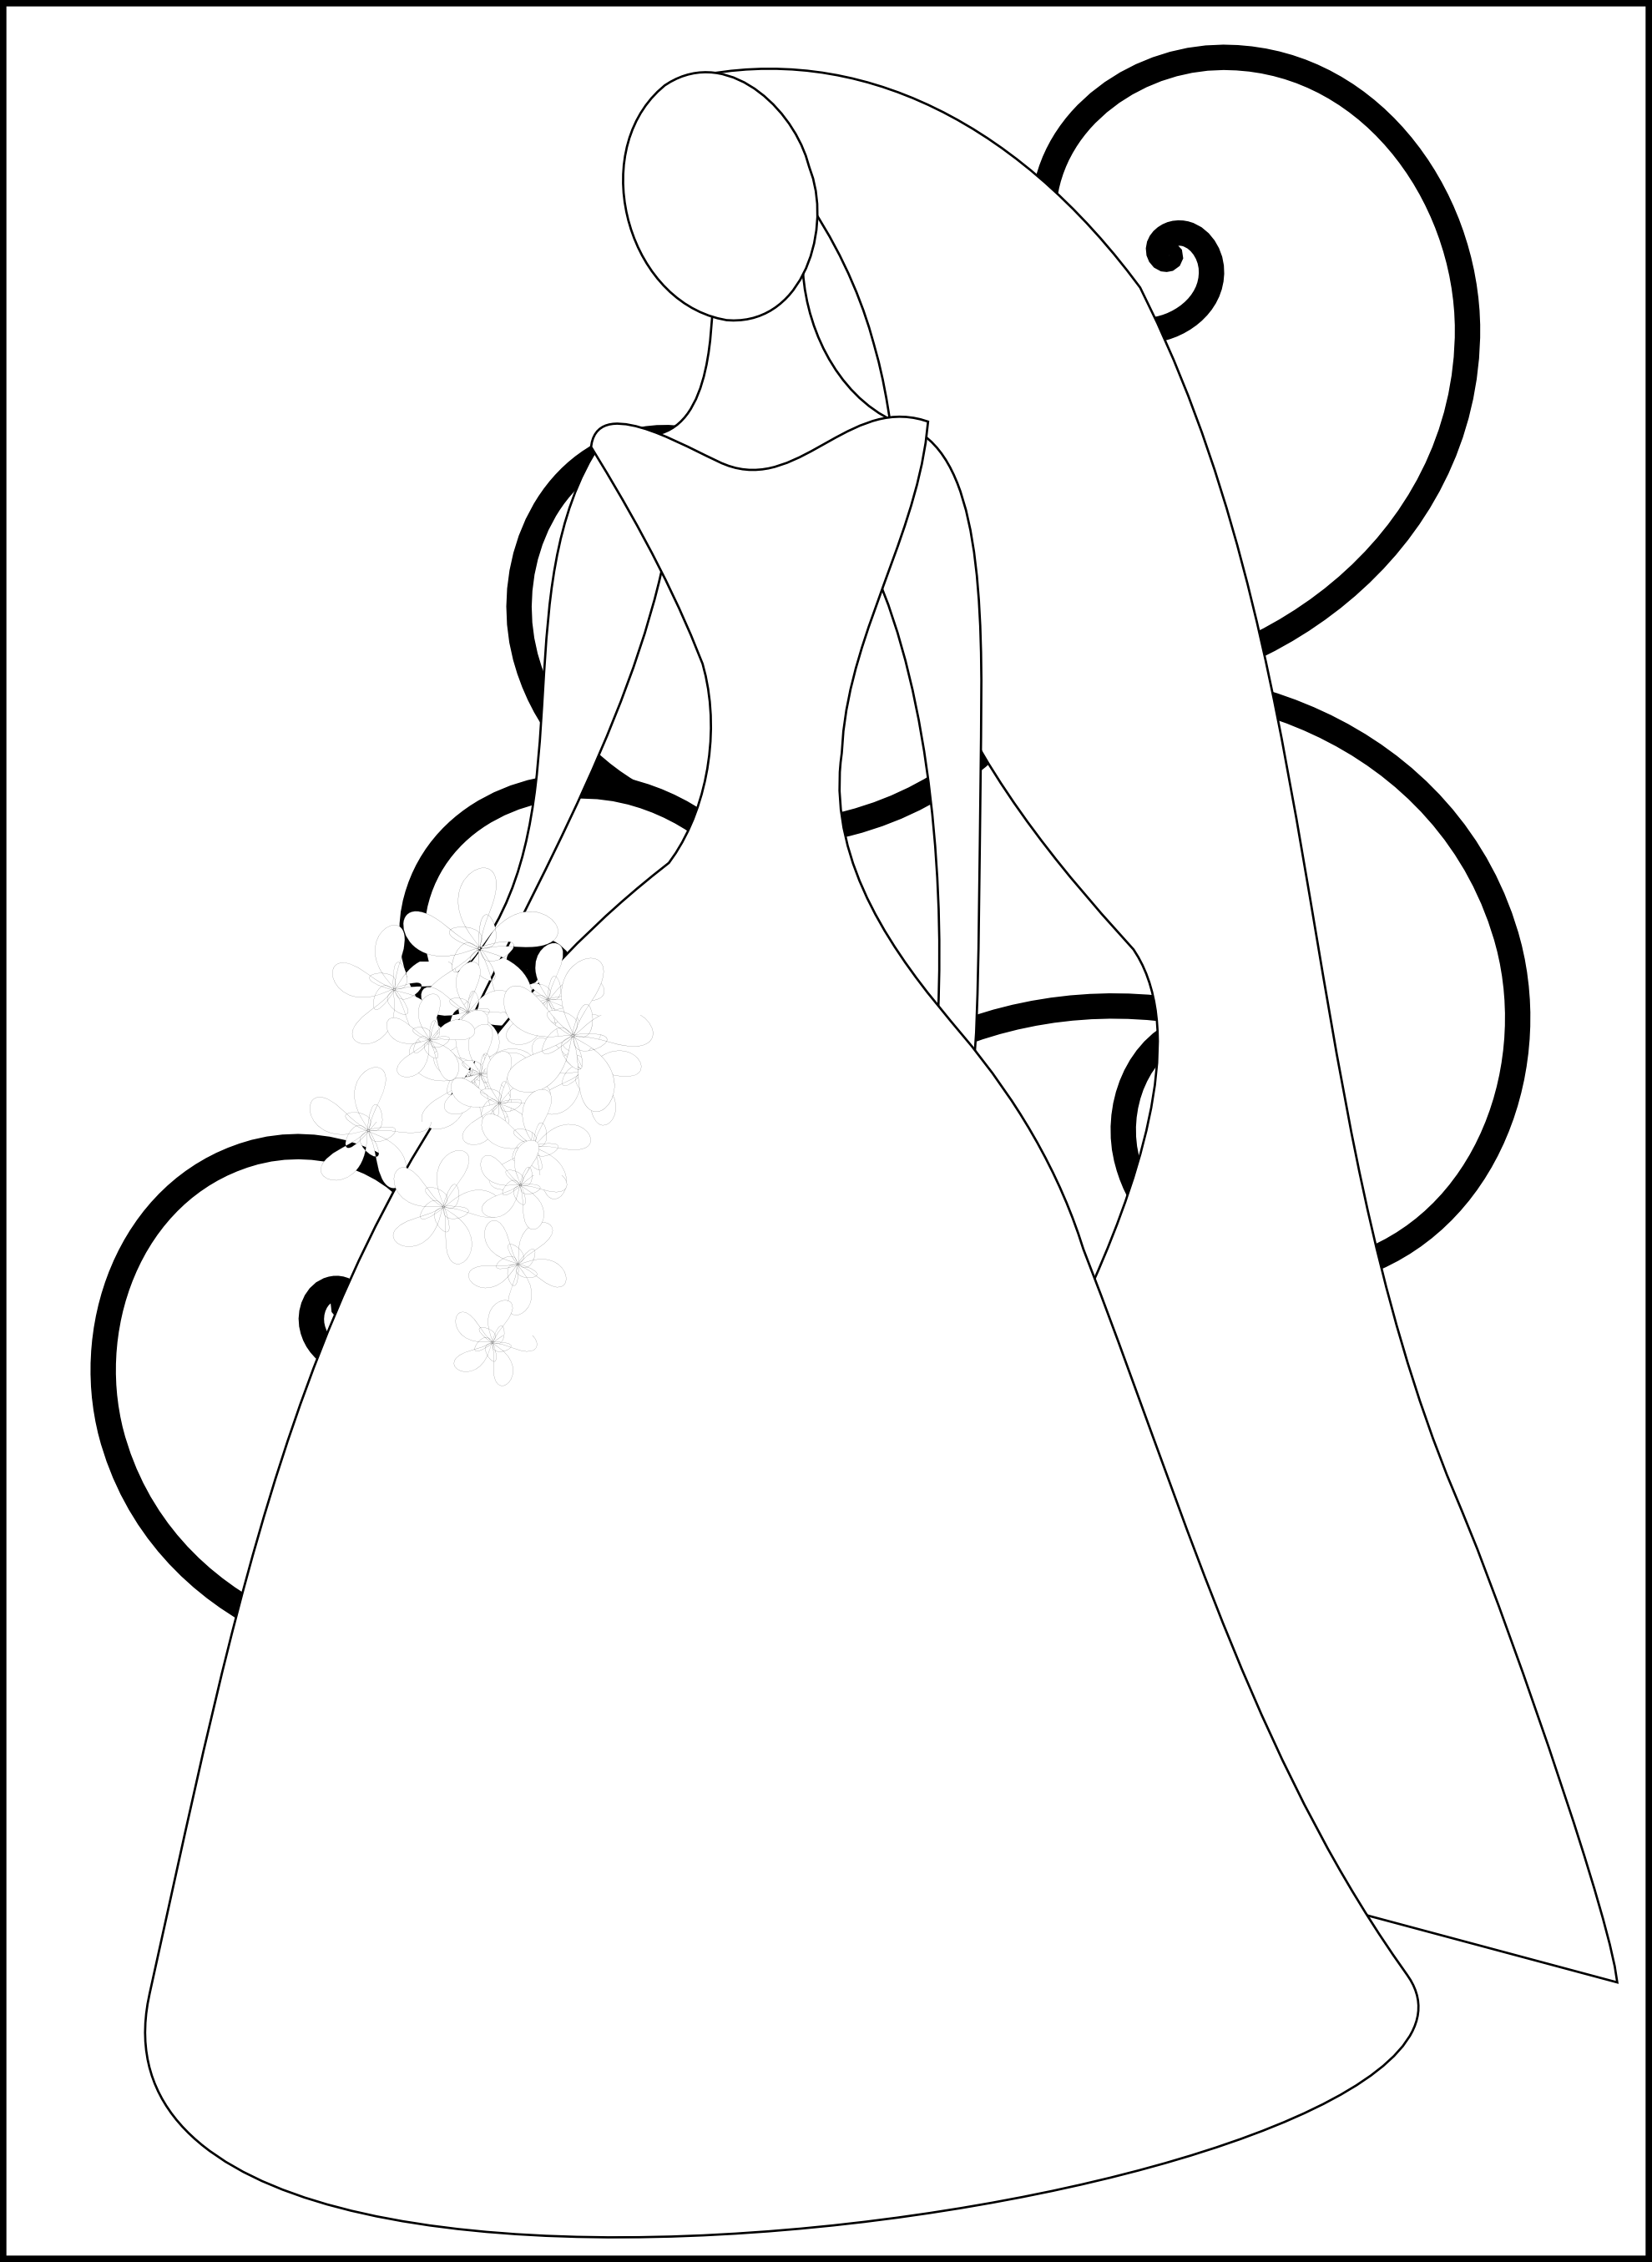 Images For > Bride Sketch Clipart